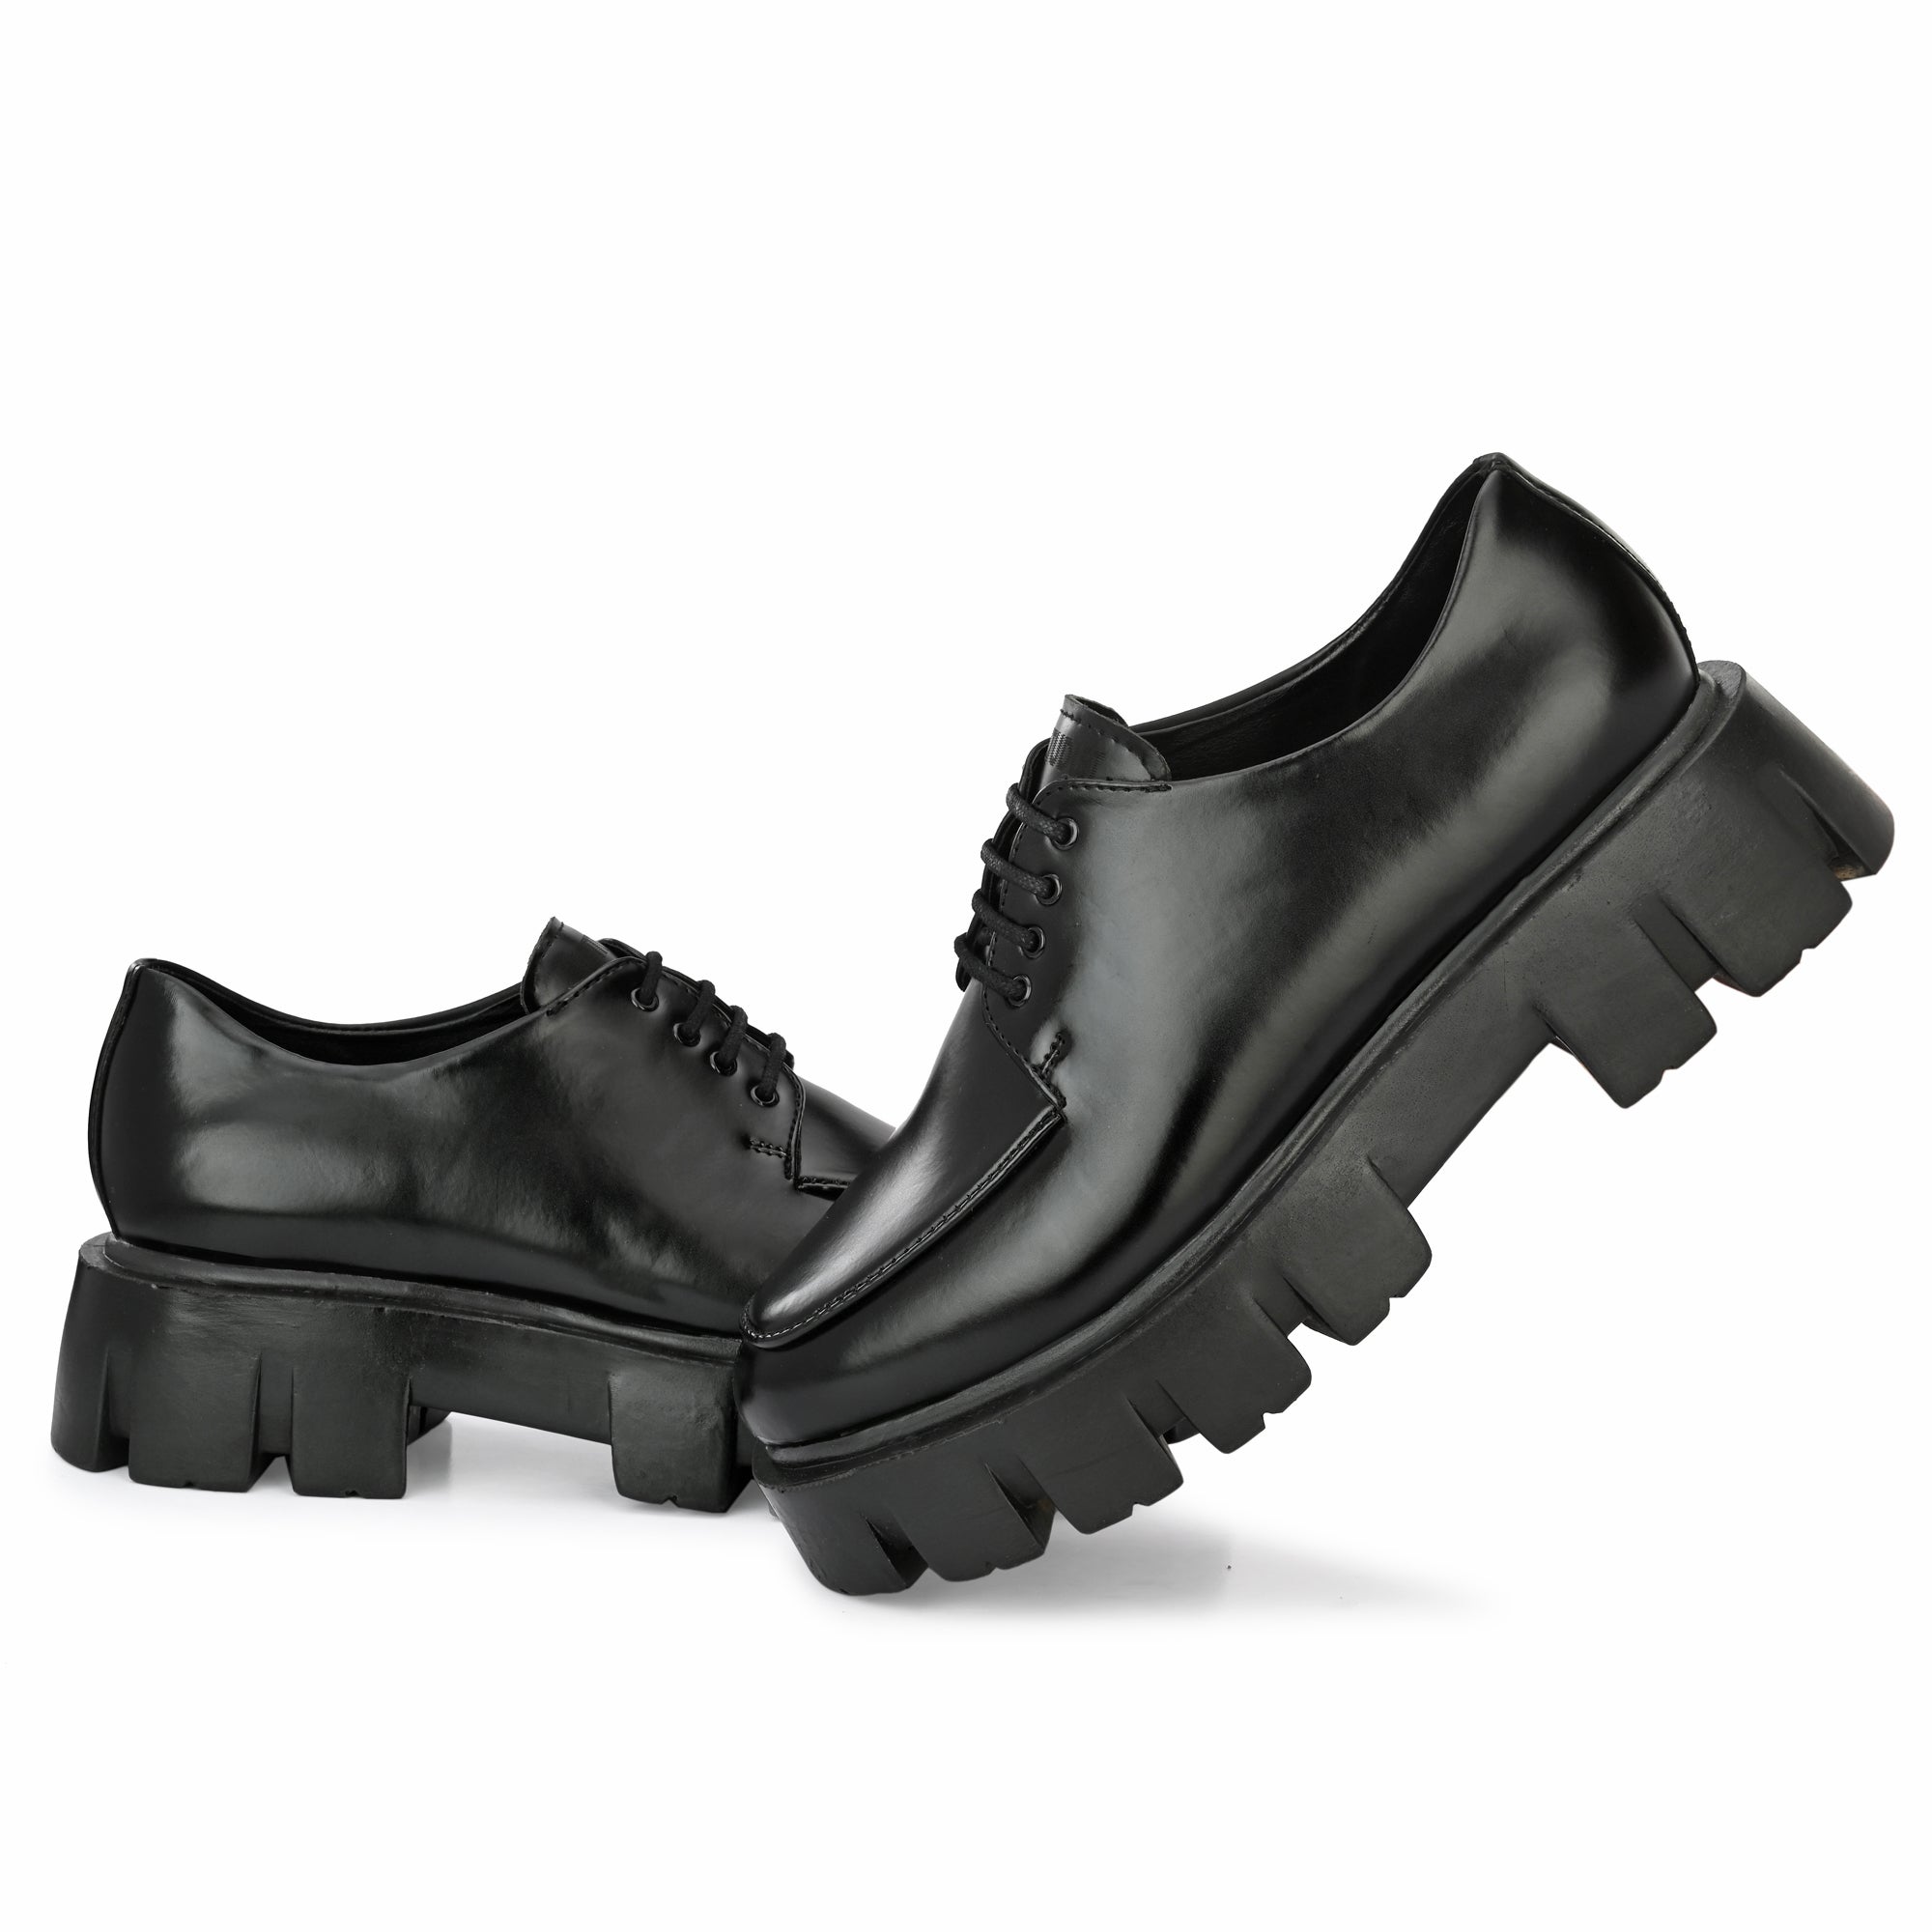 British Men's Shoes Business Formal 8cm High Heels Buckle Leather Dress  Shoes US | eBay